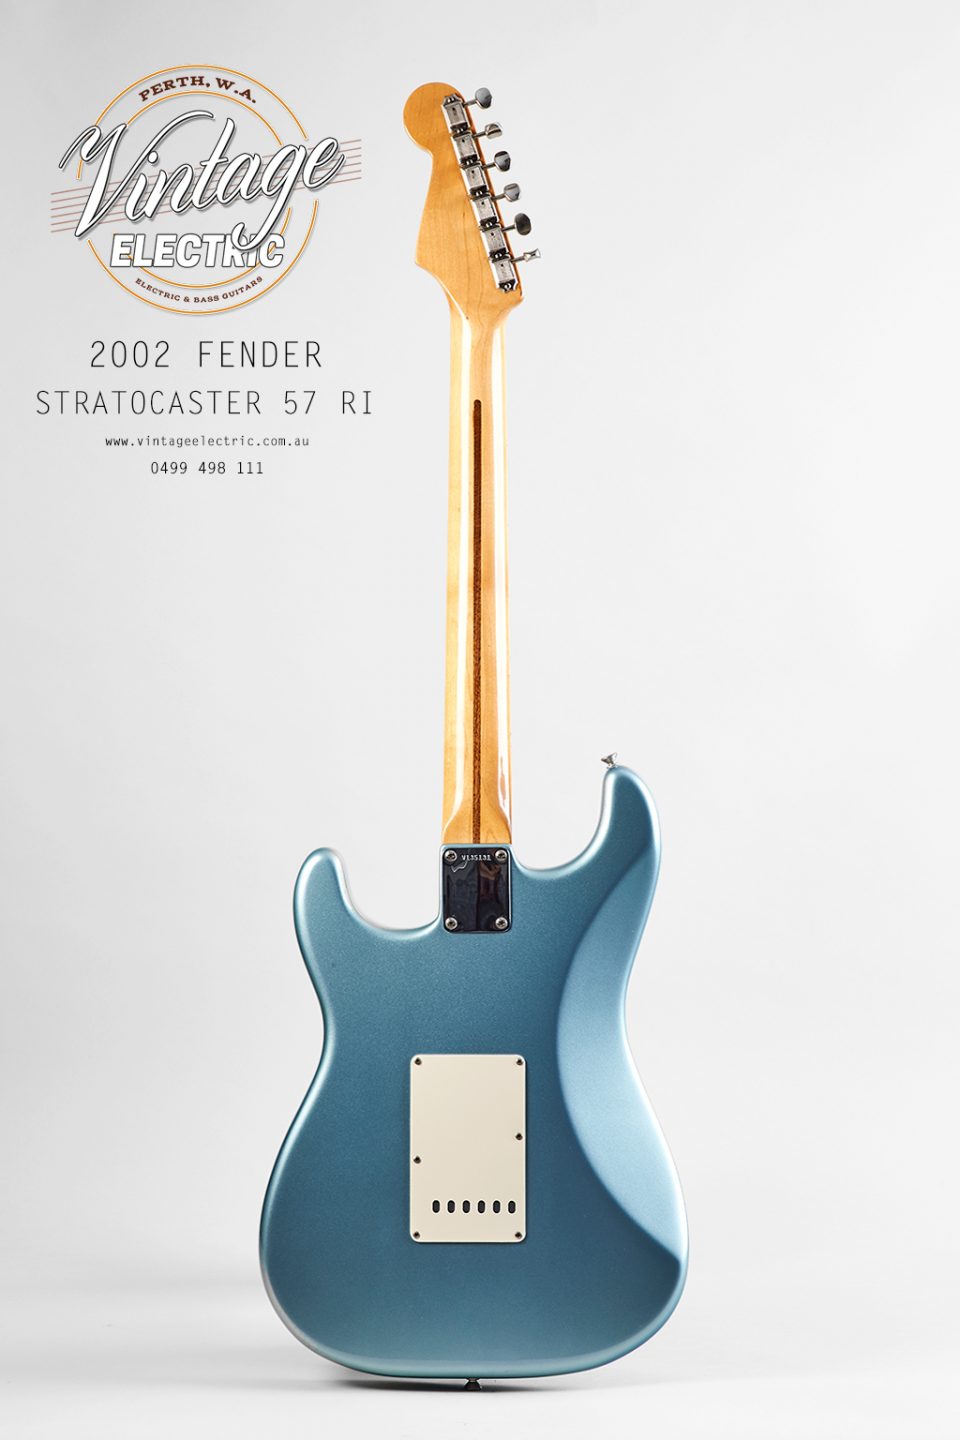 2002 Fender Stratocaster Back of Guitar